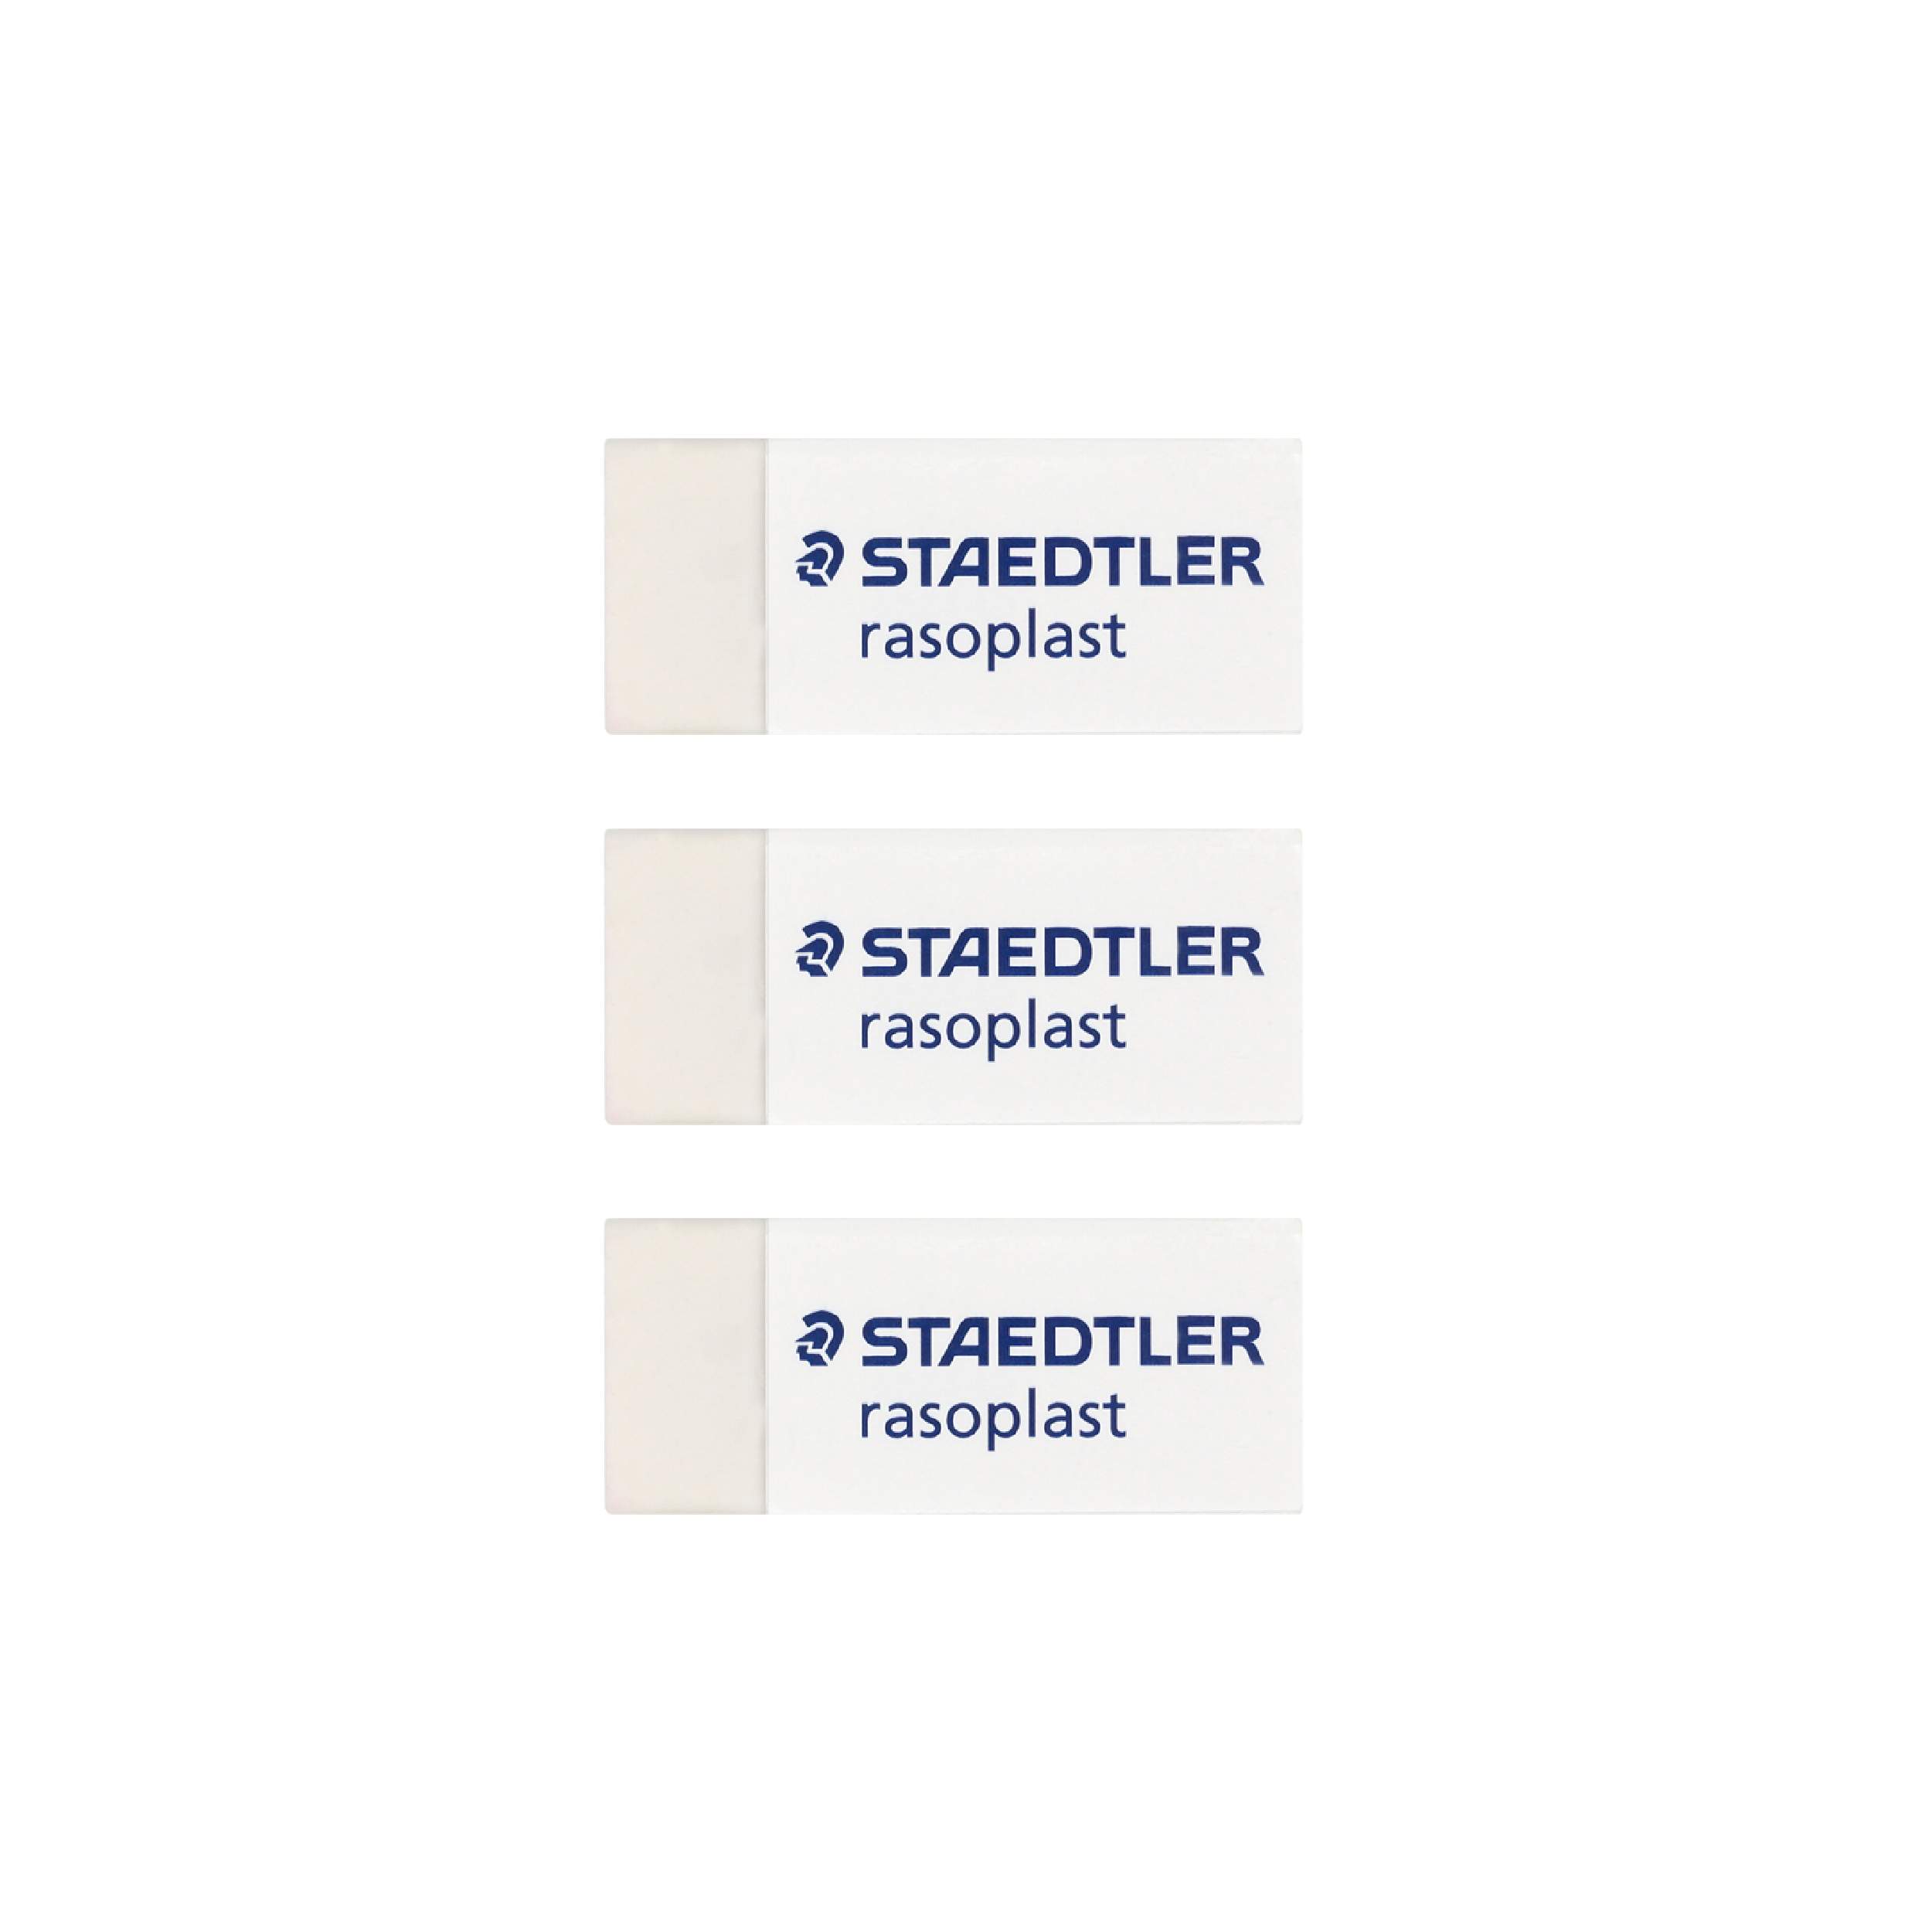 Staedtler rasoplast Erasers, Big Size, 06cm (526 B20)